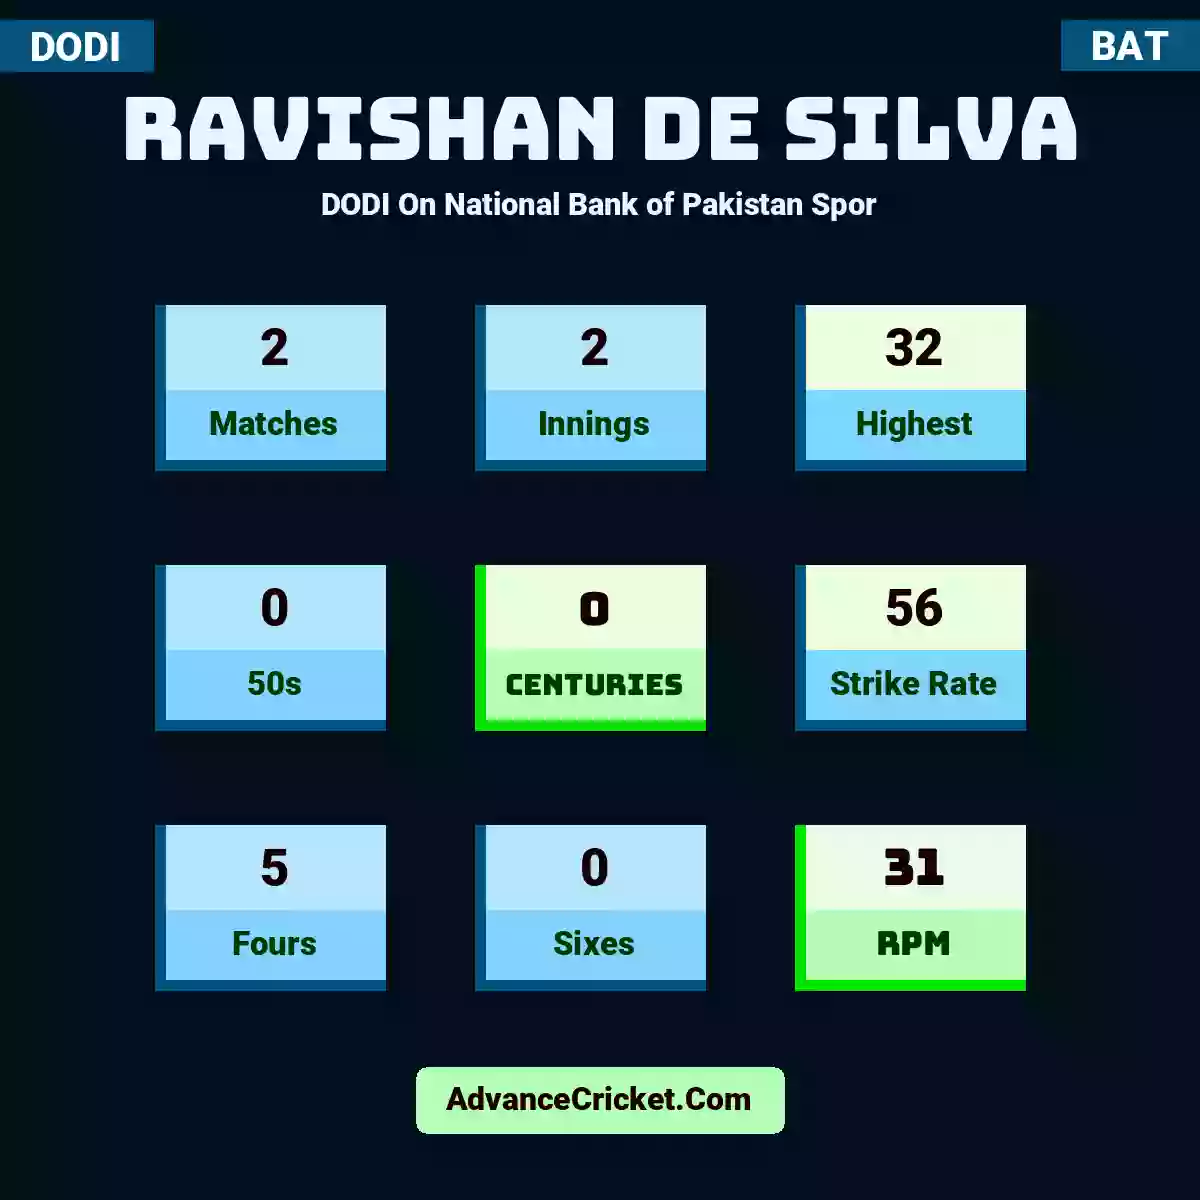 Ravishan De Silva DODI  On National Bank of Pakistan Spor, Ravishan De Silva played 2 matches, scored 32 runs as highest, 0 half-centuries, and 0 centuries, with a strike rate of 56. R.De.Silva hit 5 fours and 0 sixes, with an RPM of 31.